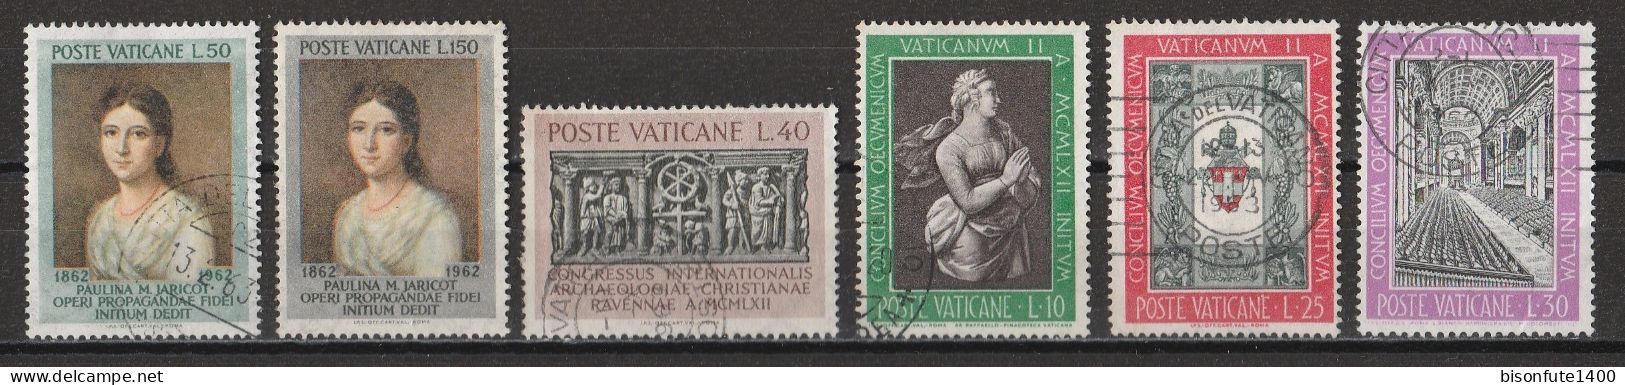 Vatican 1962 : Timbres Yvert & Tellier N° 357 - 358 - 360 - 364 - 366 - 367 - 368 - 369 - 370 - 371 Et 372 Oblitérés. - Used Stamps